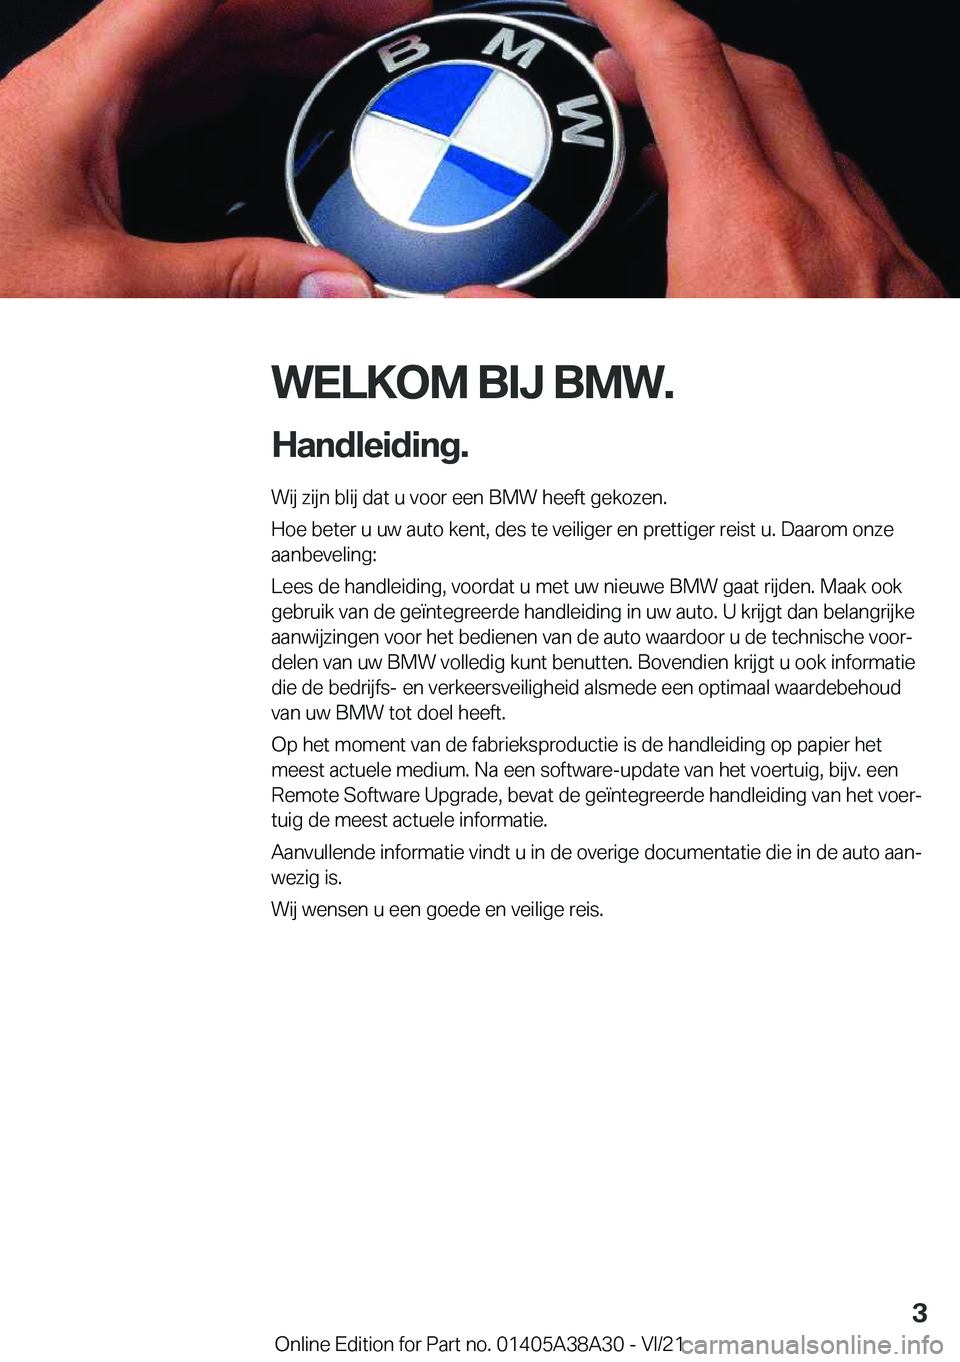 BMW 4 SERIES GRAN COUPE 2022  Instructieboekjes (in Dutch) �W�E�L�K�O�M��B�I�J��B�M�W�.
�H�a�n�d�l�e�i�d�i�n�g�. �W�i�j��z�i�j�n��b�l�i�j��d�a�t��u��v�o�o�r��e�e�n��B�M�W��h�e�e�f�t��g�e�k�o�z�e�n�.
�H�o�e��b�e�t�e�r��u��u�w��a�u�t�o��k�e�n�t�